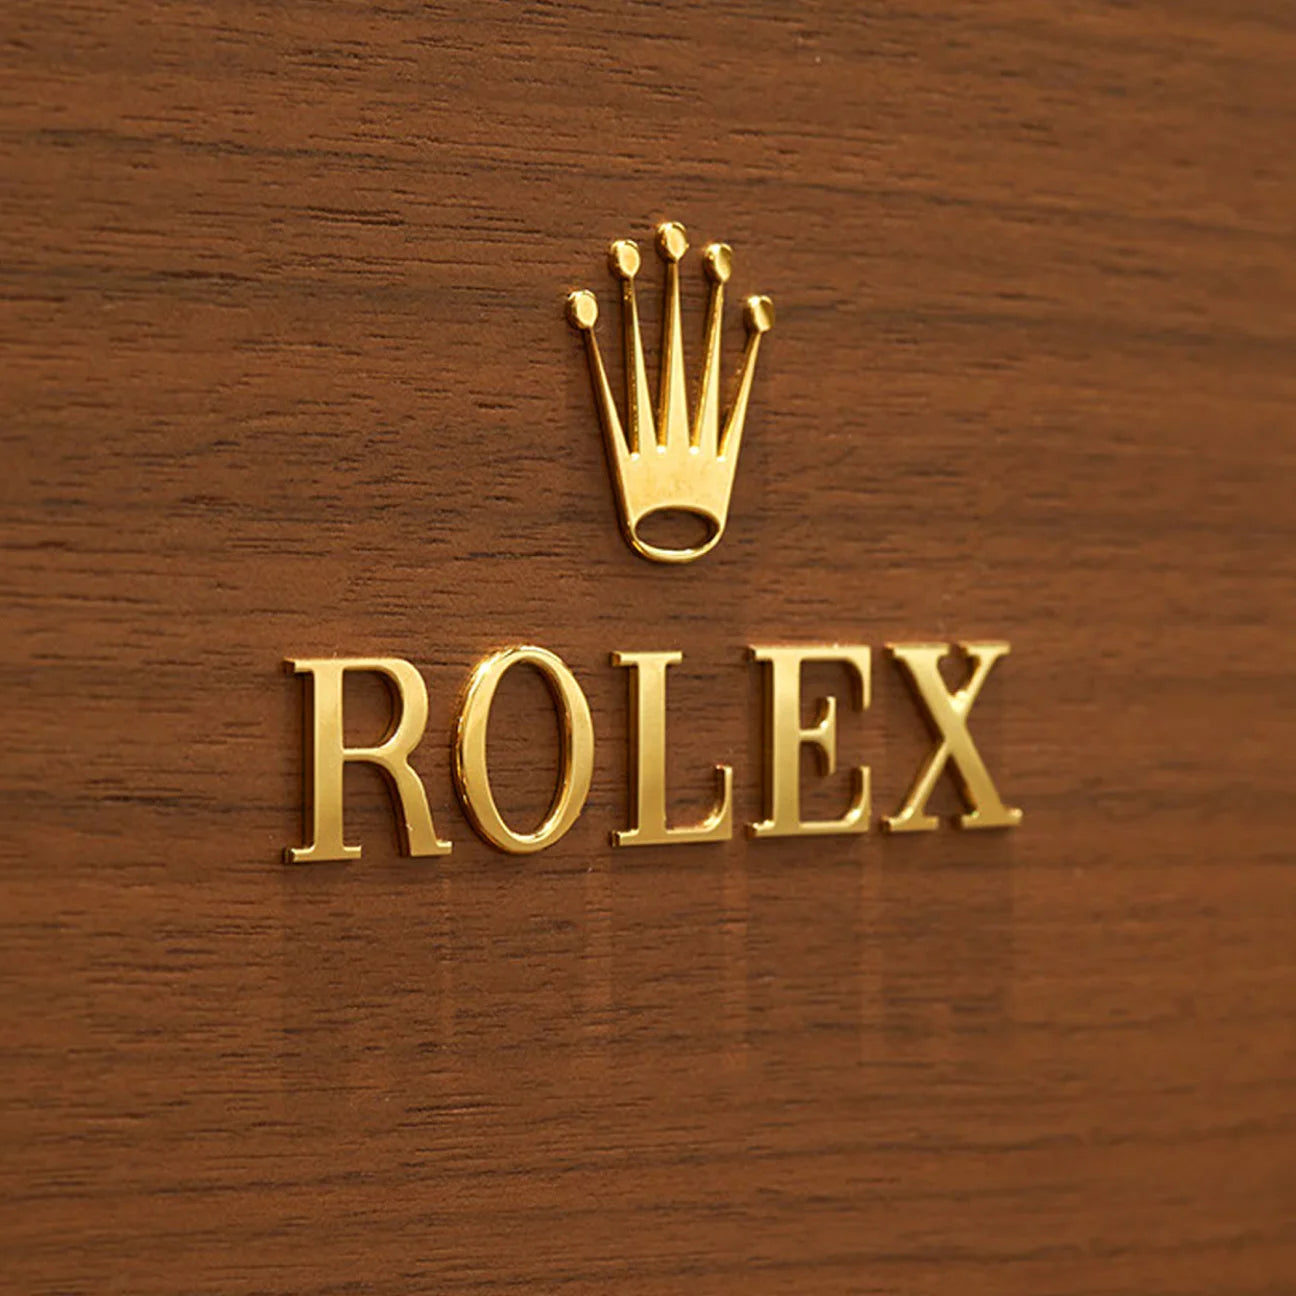 Rolex watches at 